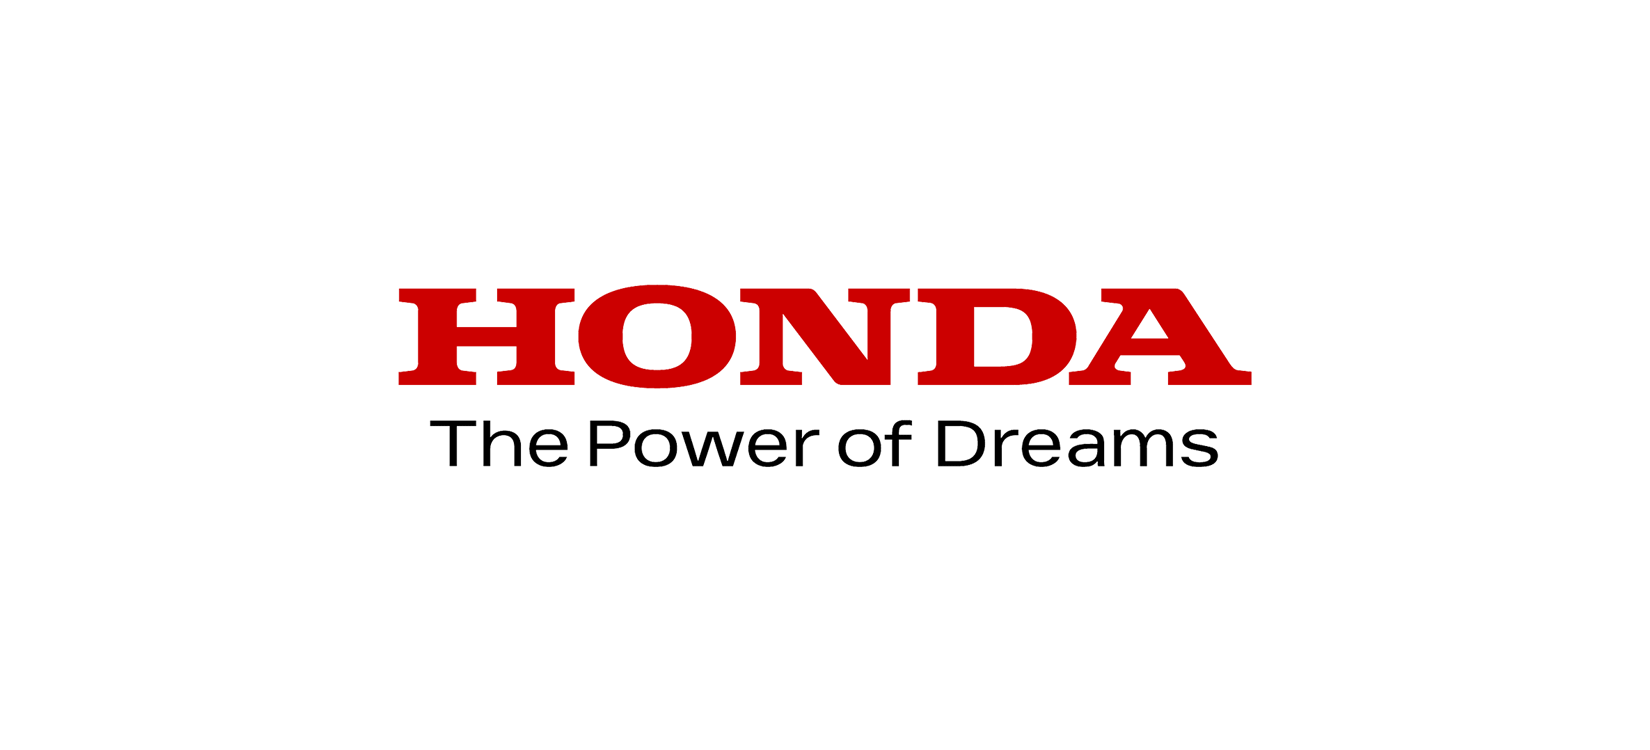 Summary of 2023 Honda Business Briefing – Honda’s corporate transformation initiatives including electrification